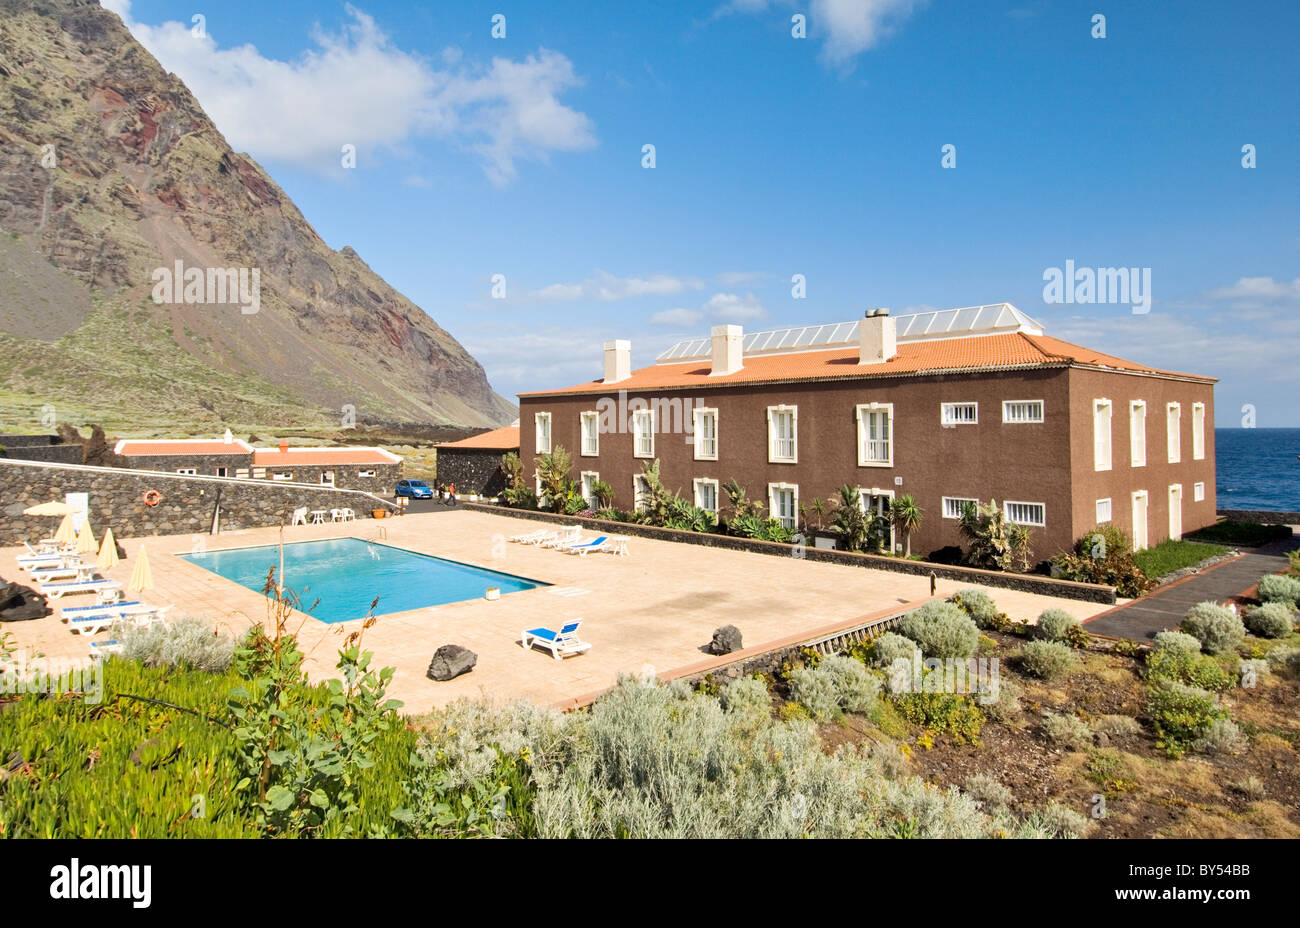 El Hierro, Canary Islands. The Hotel Balneario Pozo de la Salud. A spa hotel based on a local curative mineral water spring Stock Photo